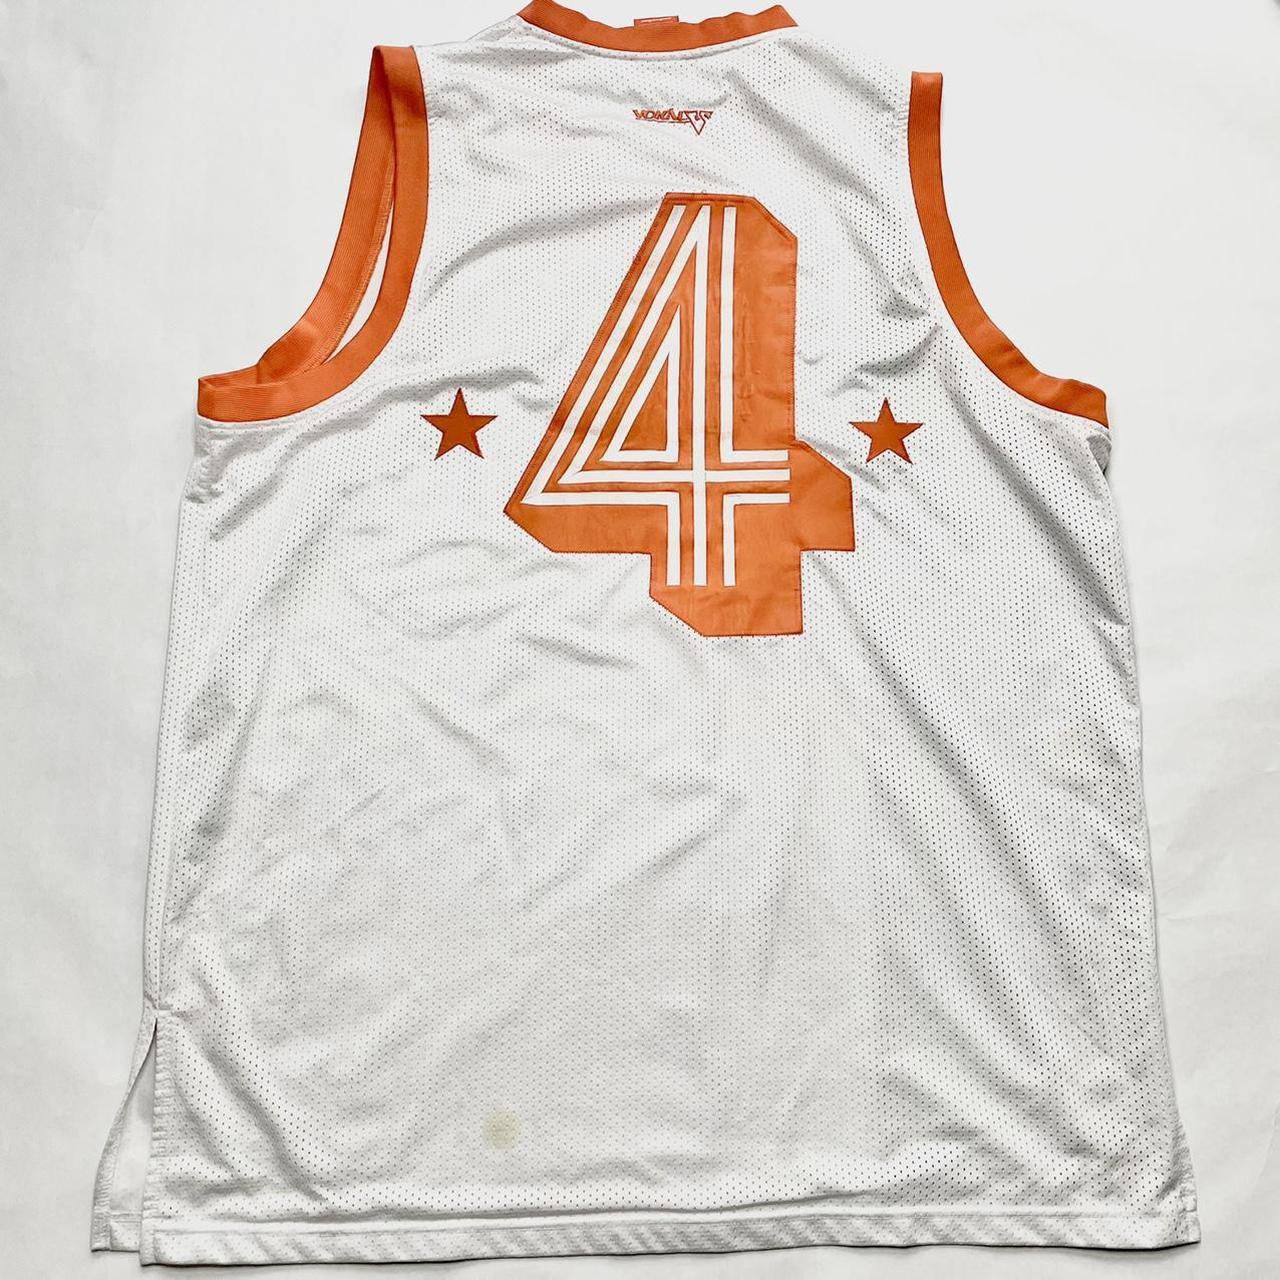 NBA Men's White and Orange Shirt (3)